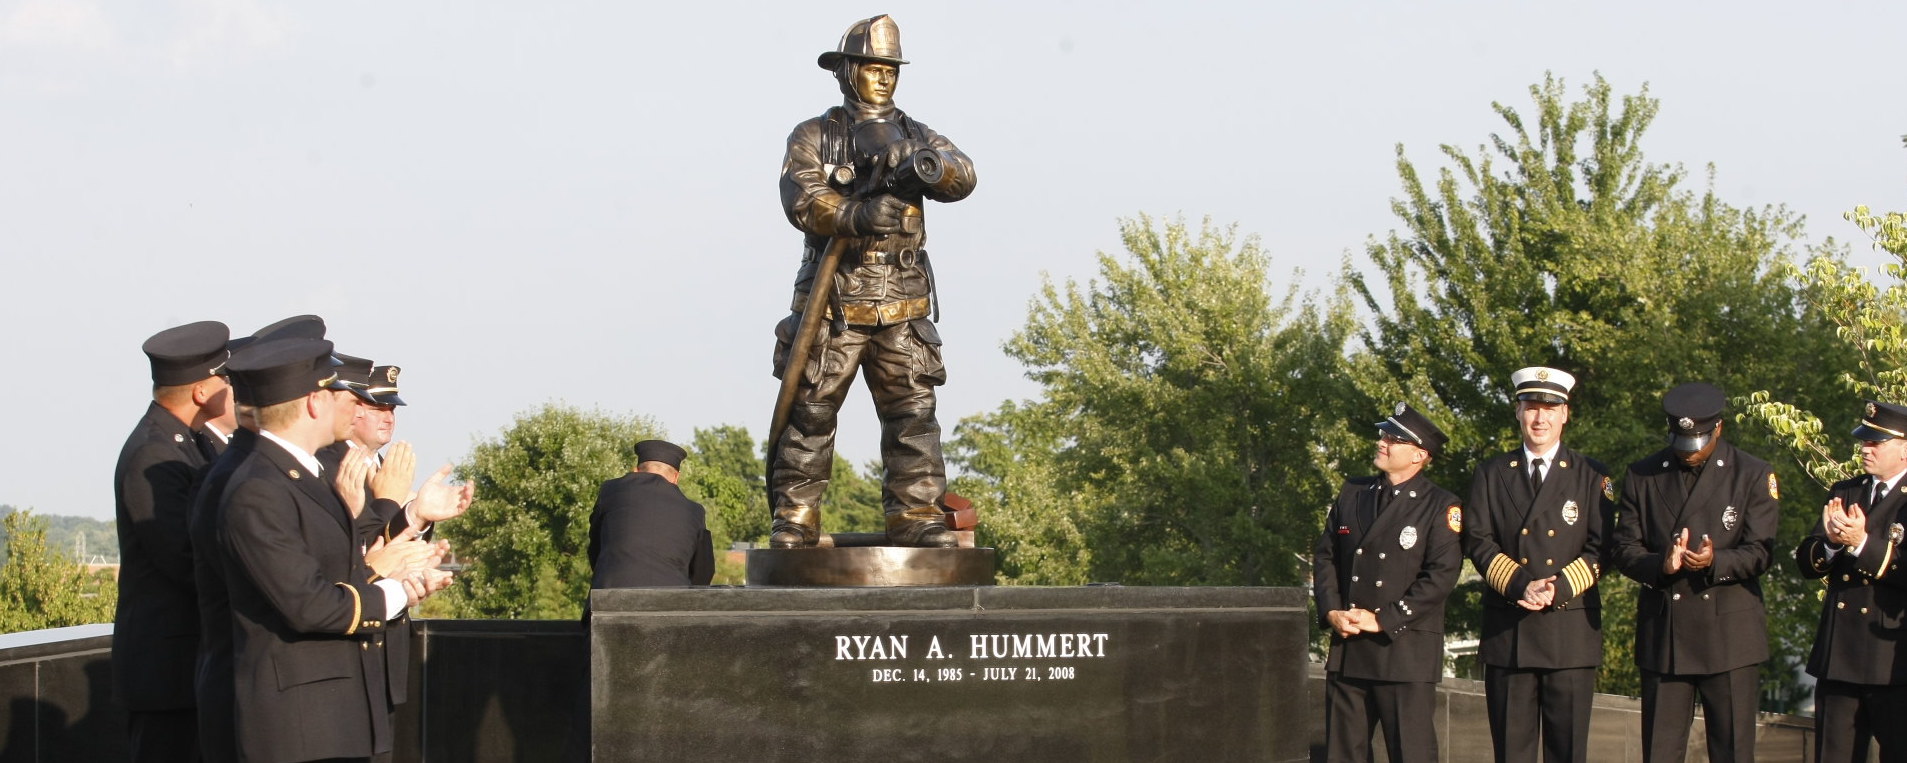 Ryan Hummert sculpture unveiled, dedicated